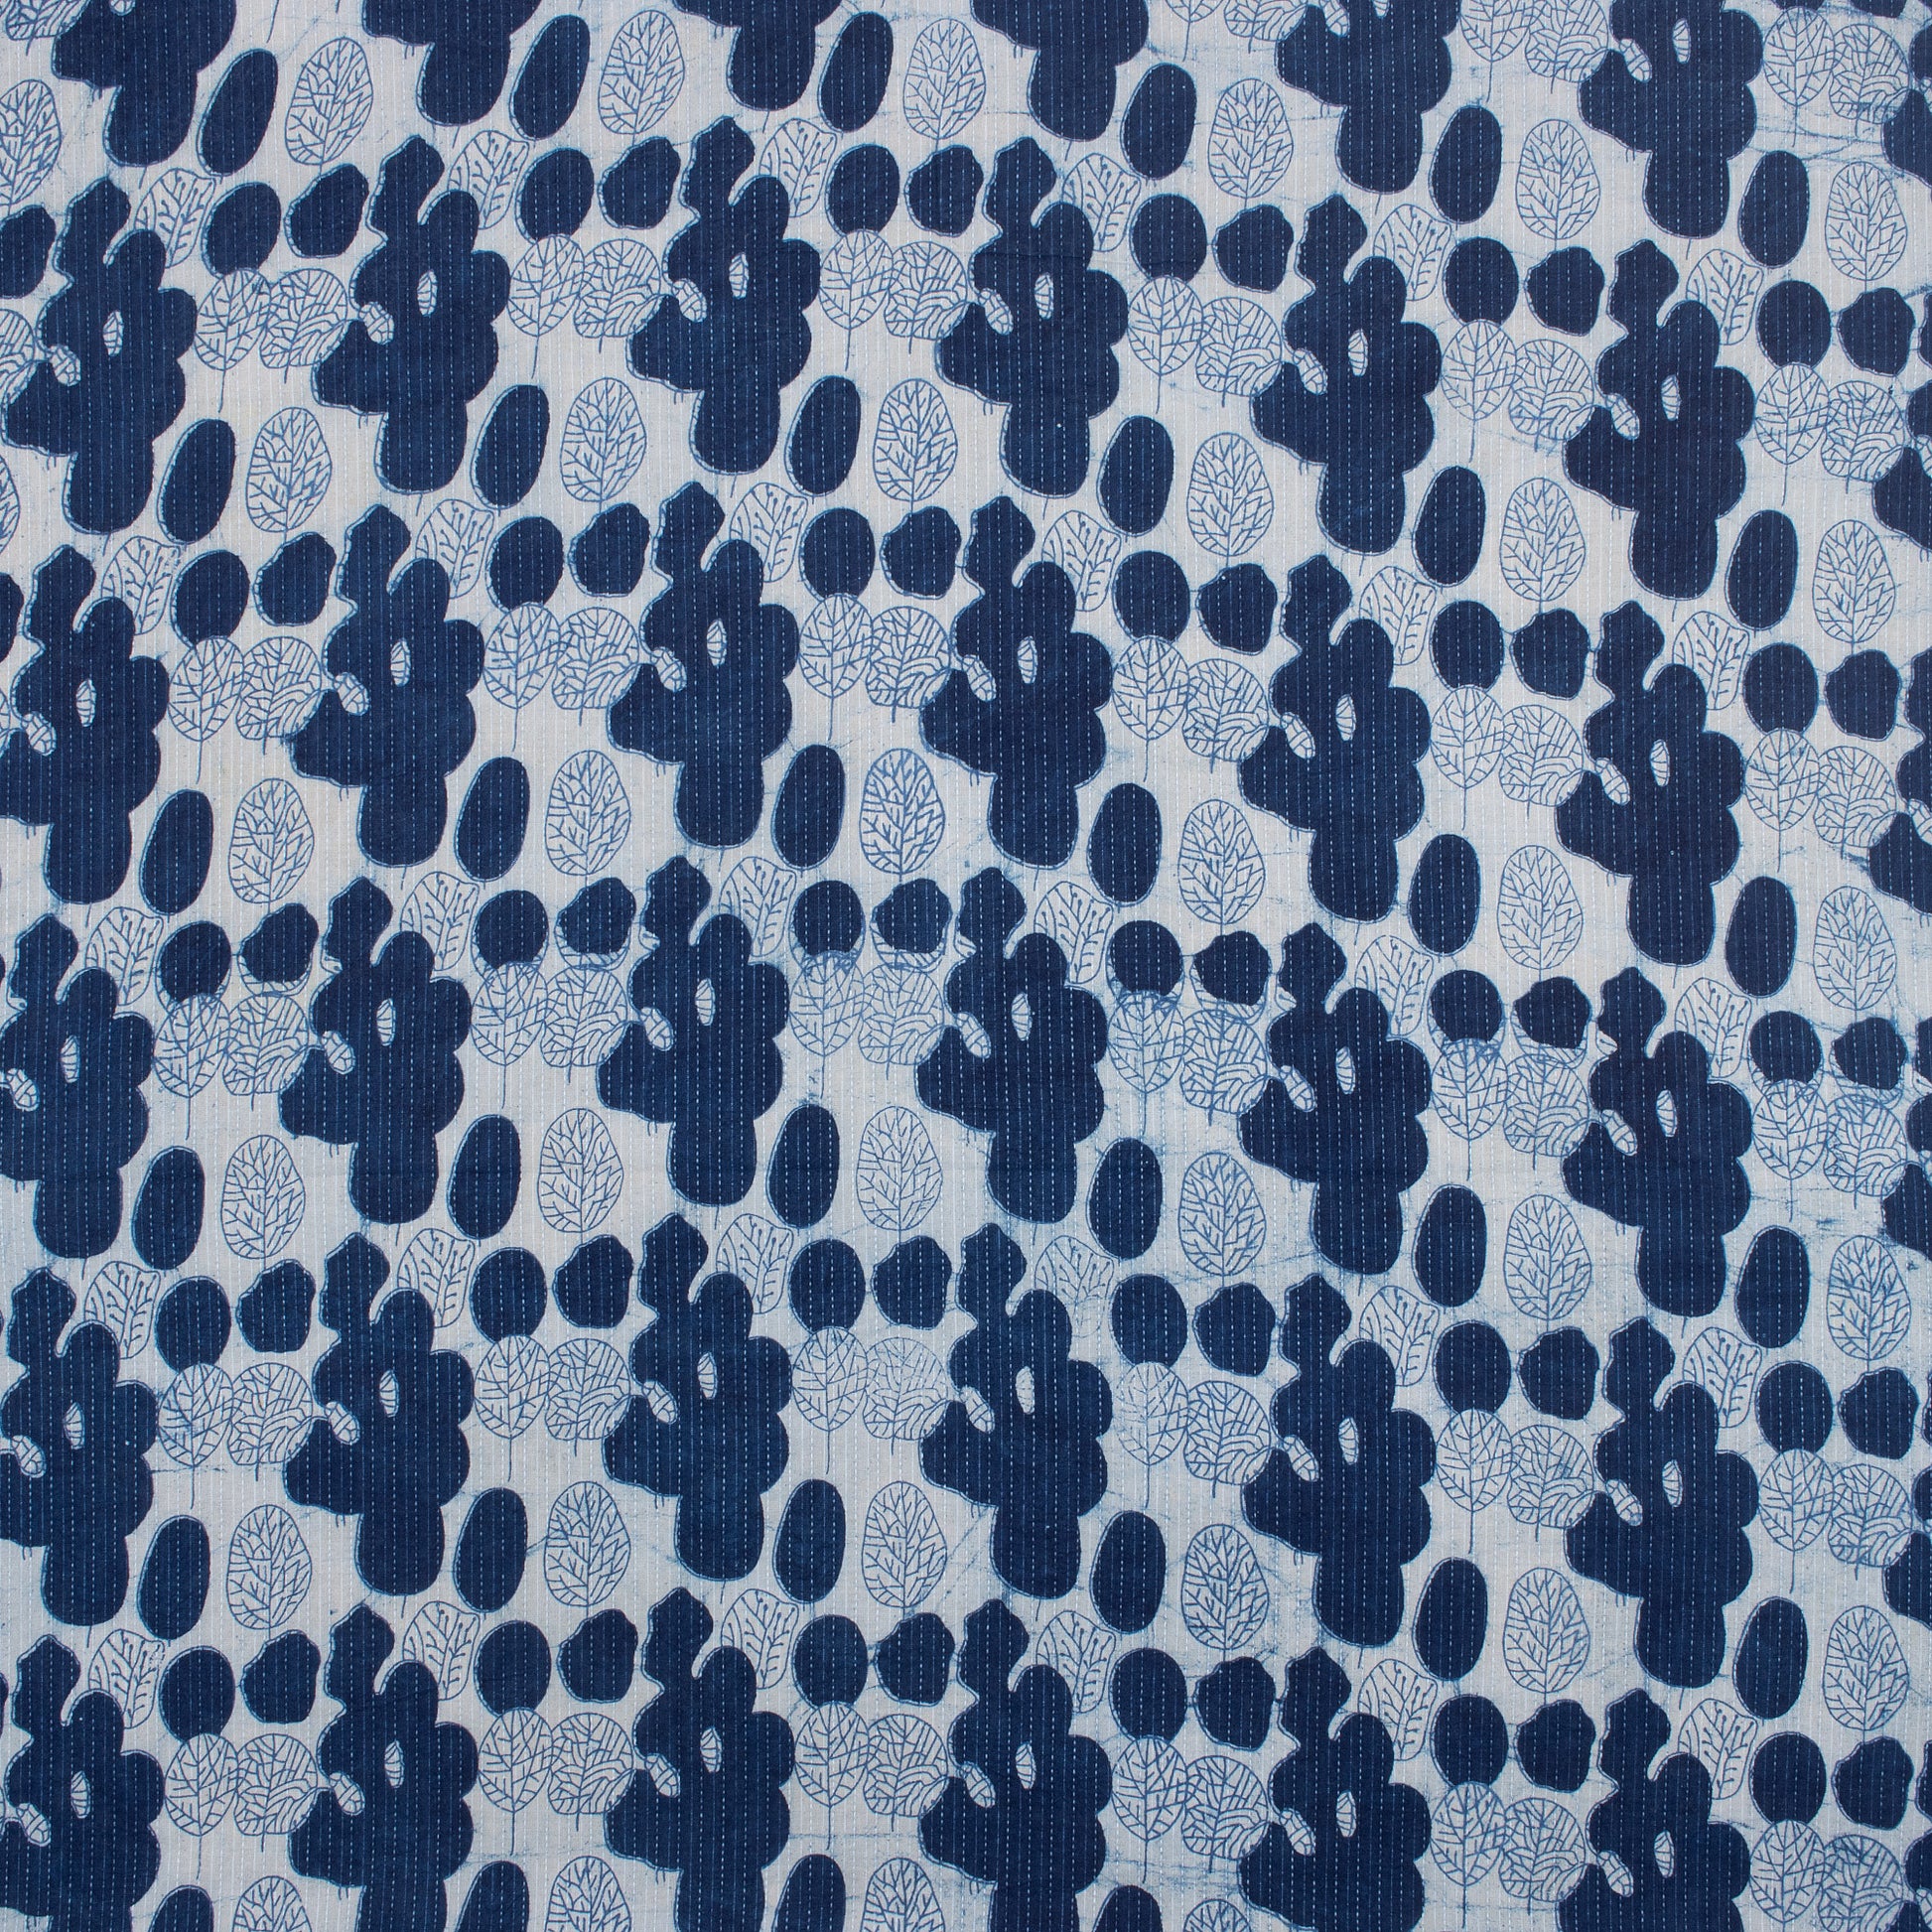 Indigo Blue Leaf Printed Indian Kantha Fabric